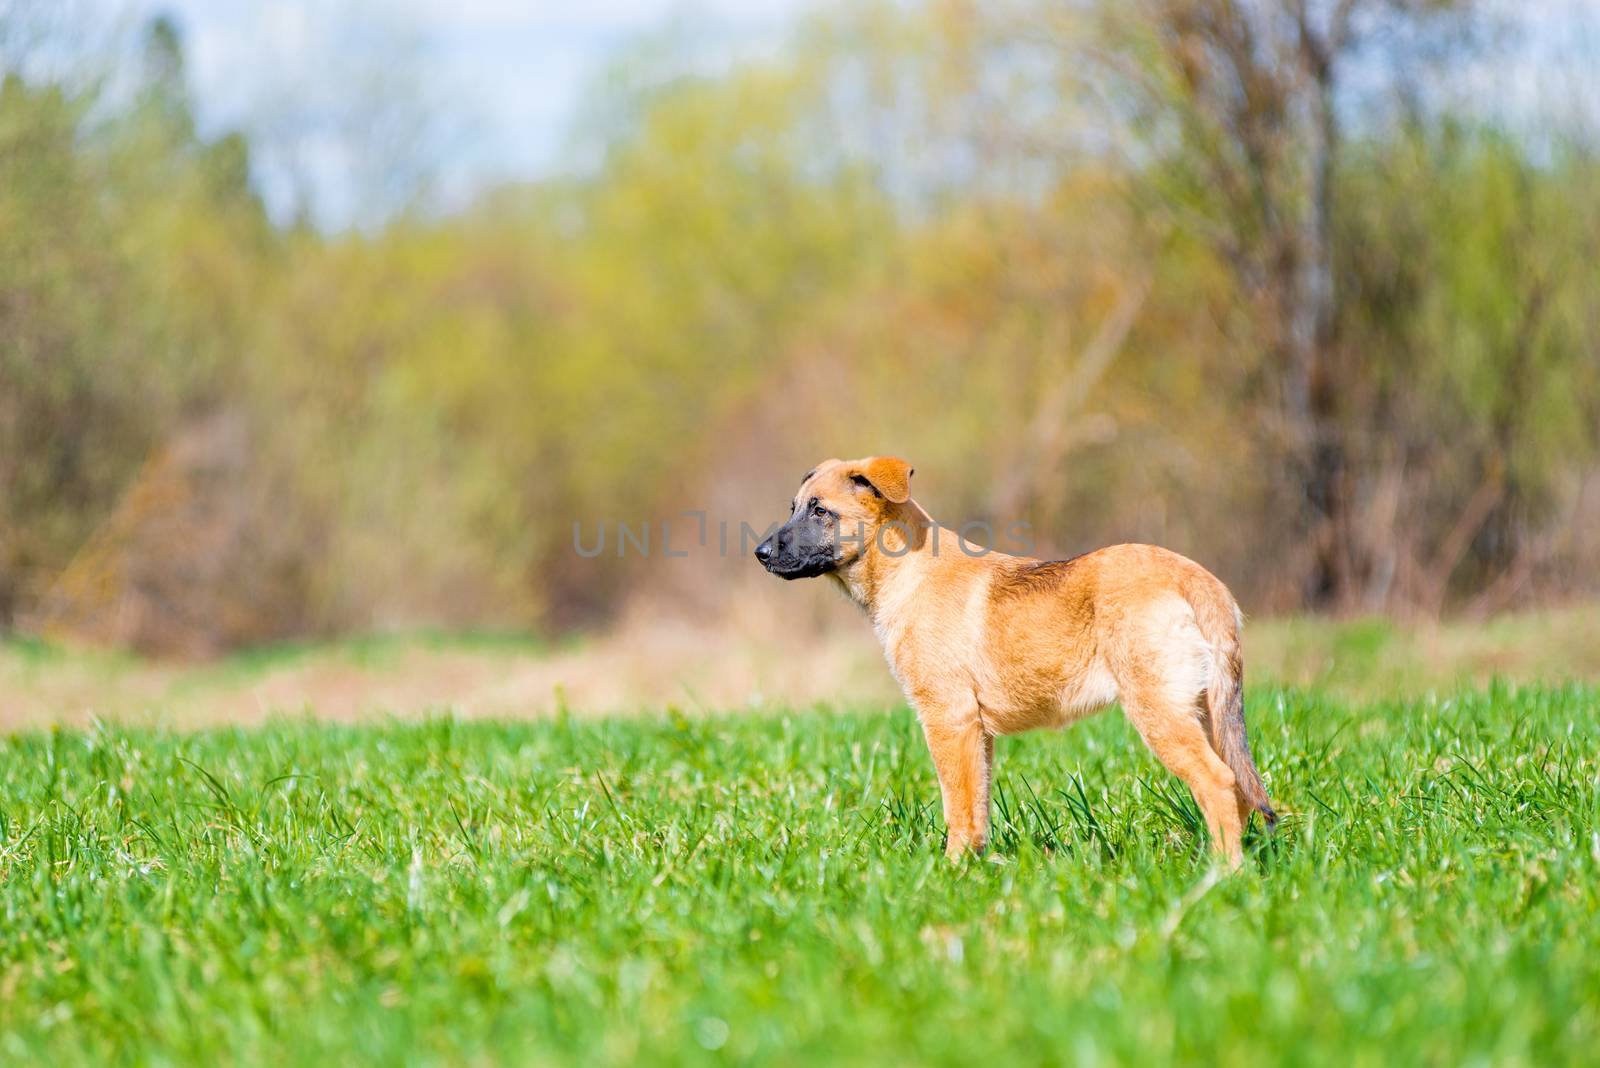 sideless puppy on lawn, side portrait by kosmsos111